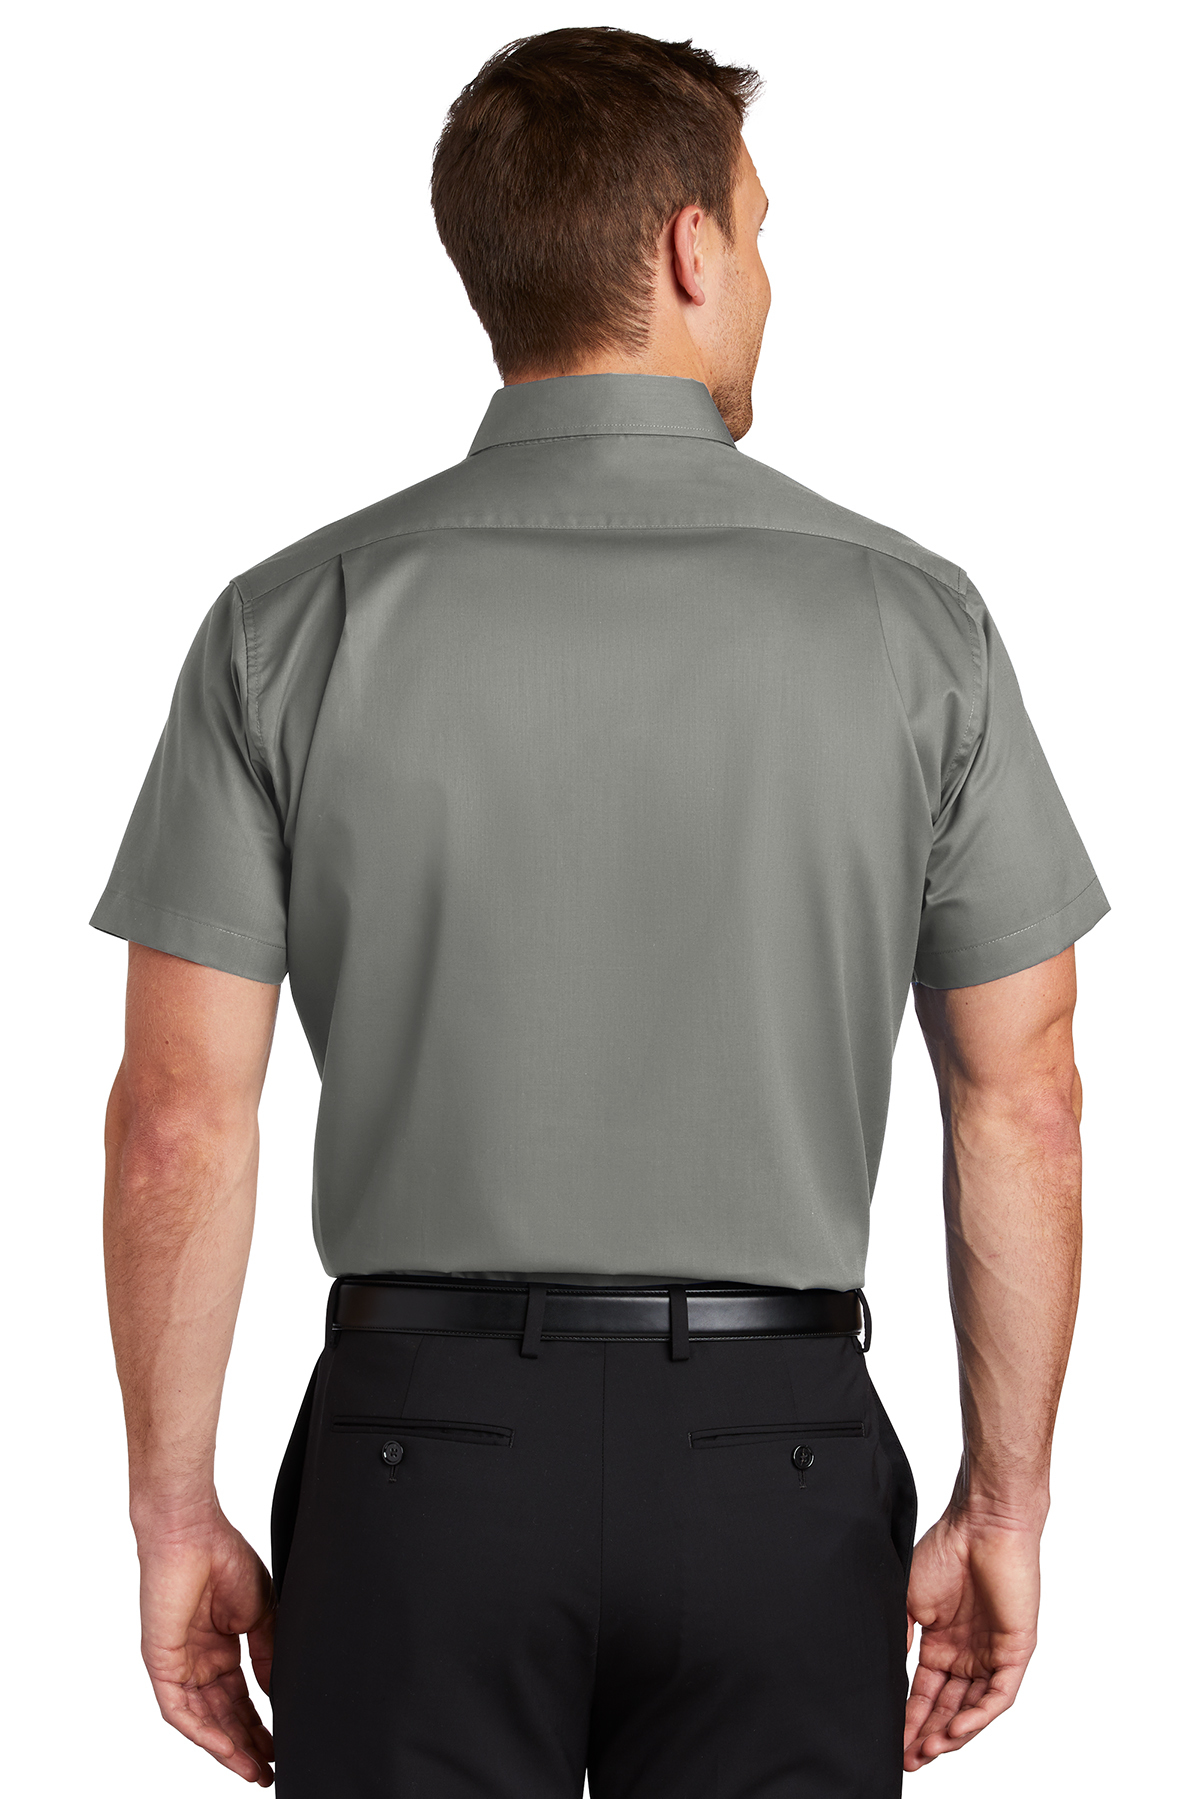 Port Authority Short Sleeve SuperPro Twill Shirt | Product | Company ...